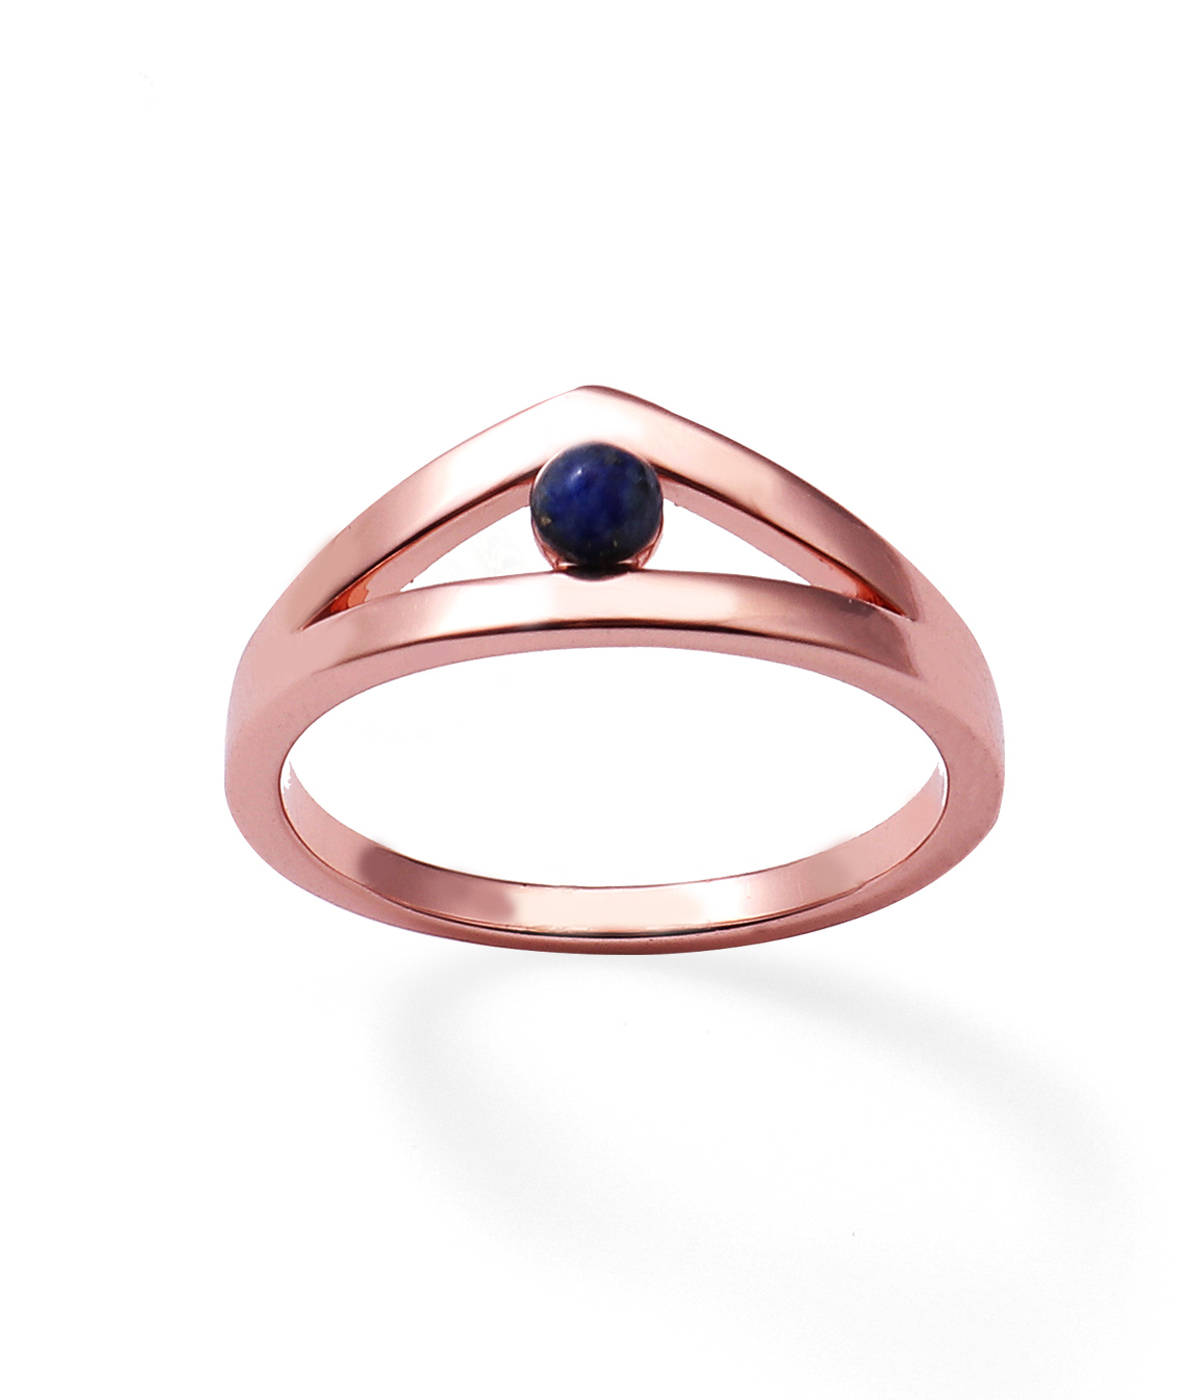  V Shape Plating Ring -latest RING,Band Ring design 2021